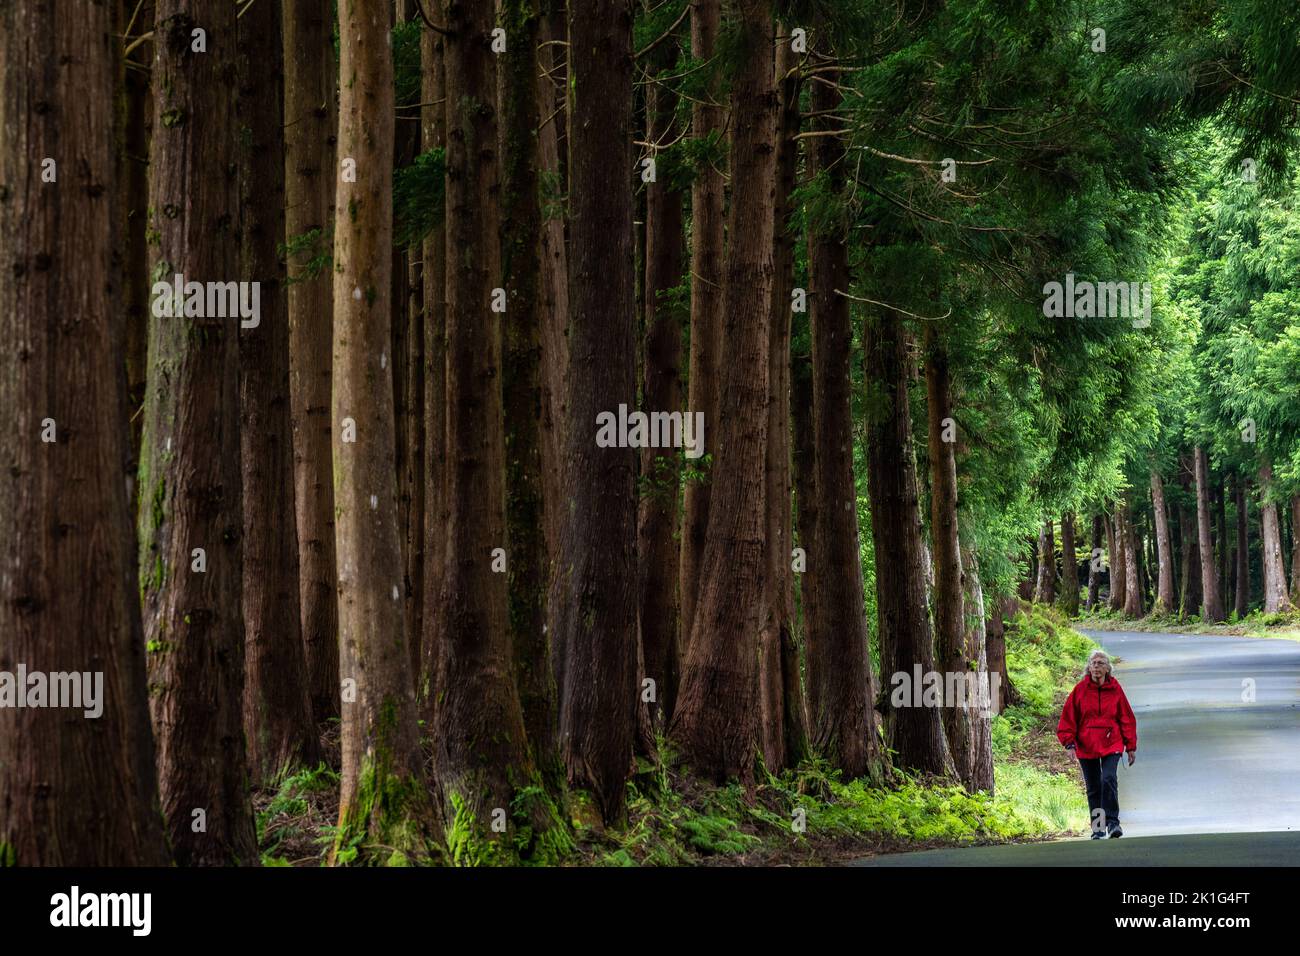 A woman walk past giant Japanese cedar trees in the Reserva Florestal Parcial da Serra de S. Barbara e dos Misterios Negros nature park in Terceira Island, Azores, Portugal. More than 22 percent of the land on Terceira Island is set aside as nature preserves. Stock Photo